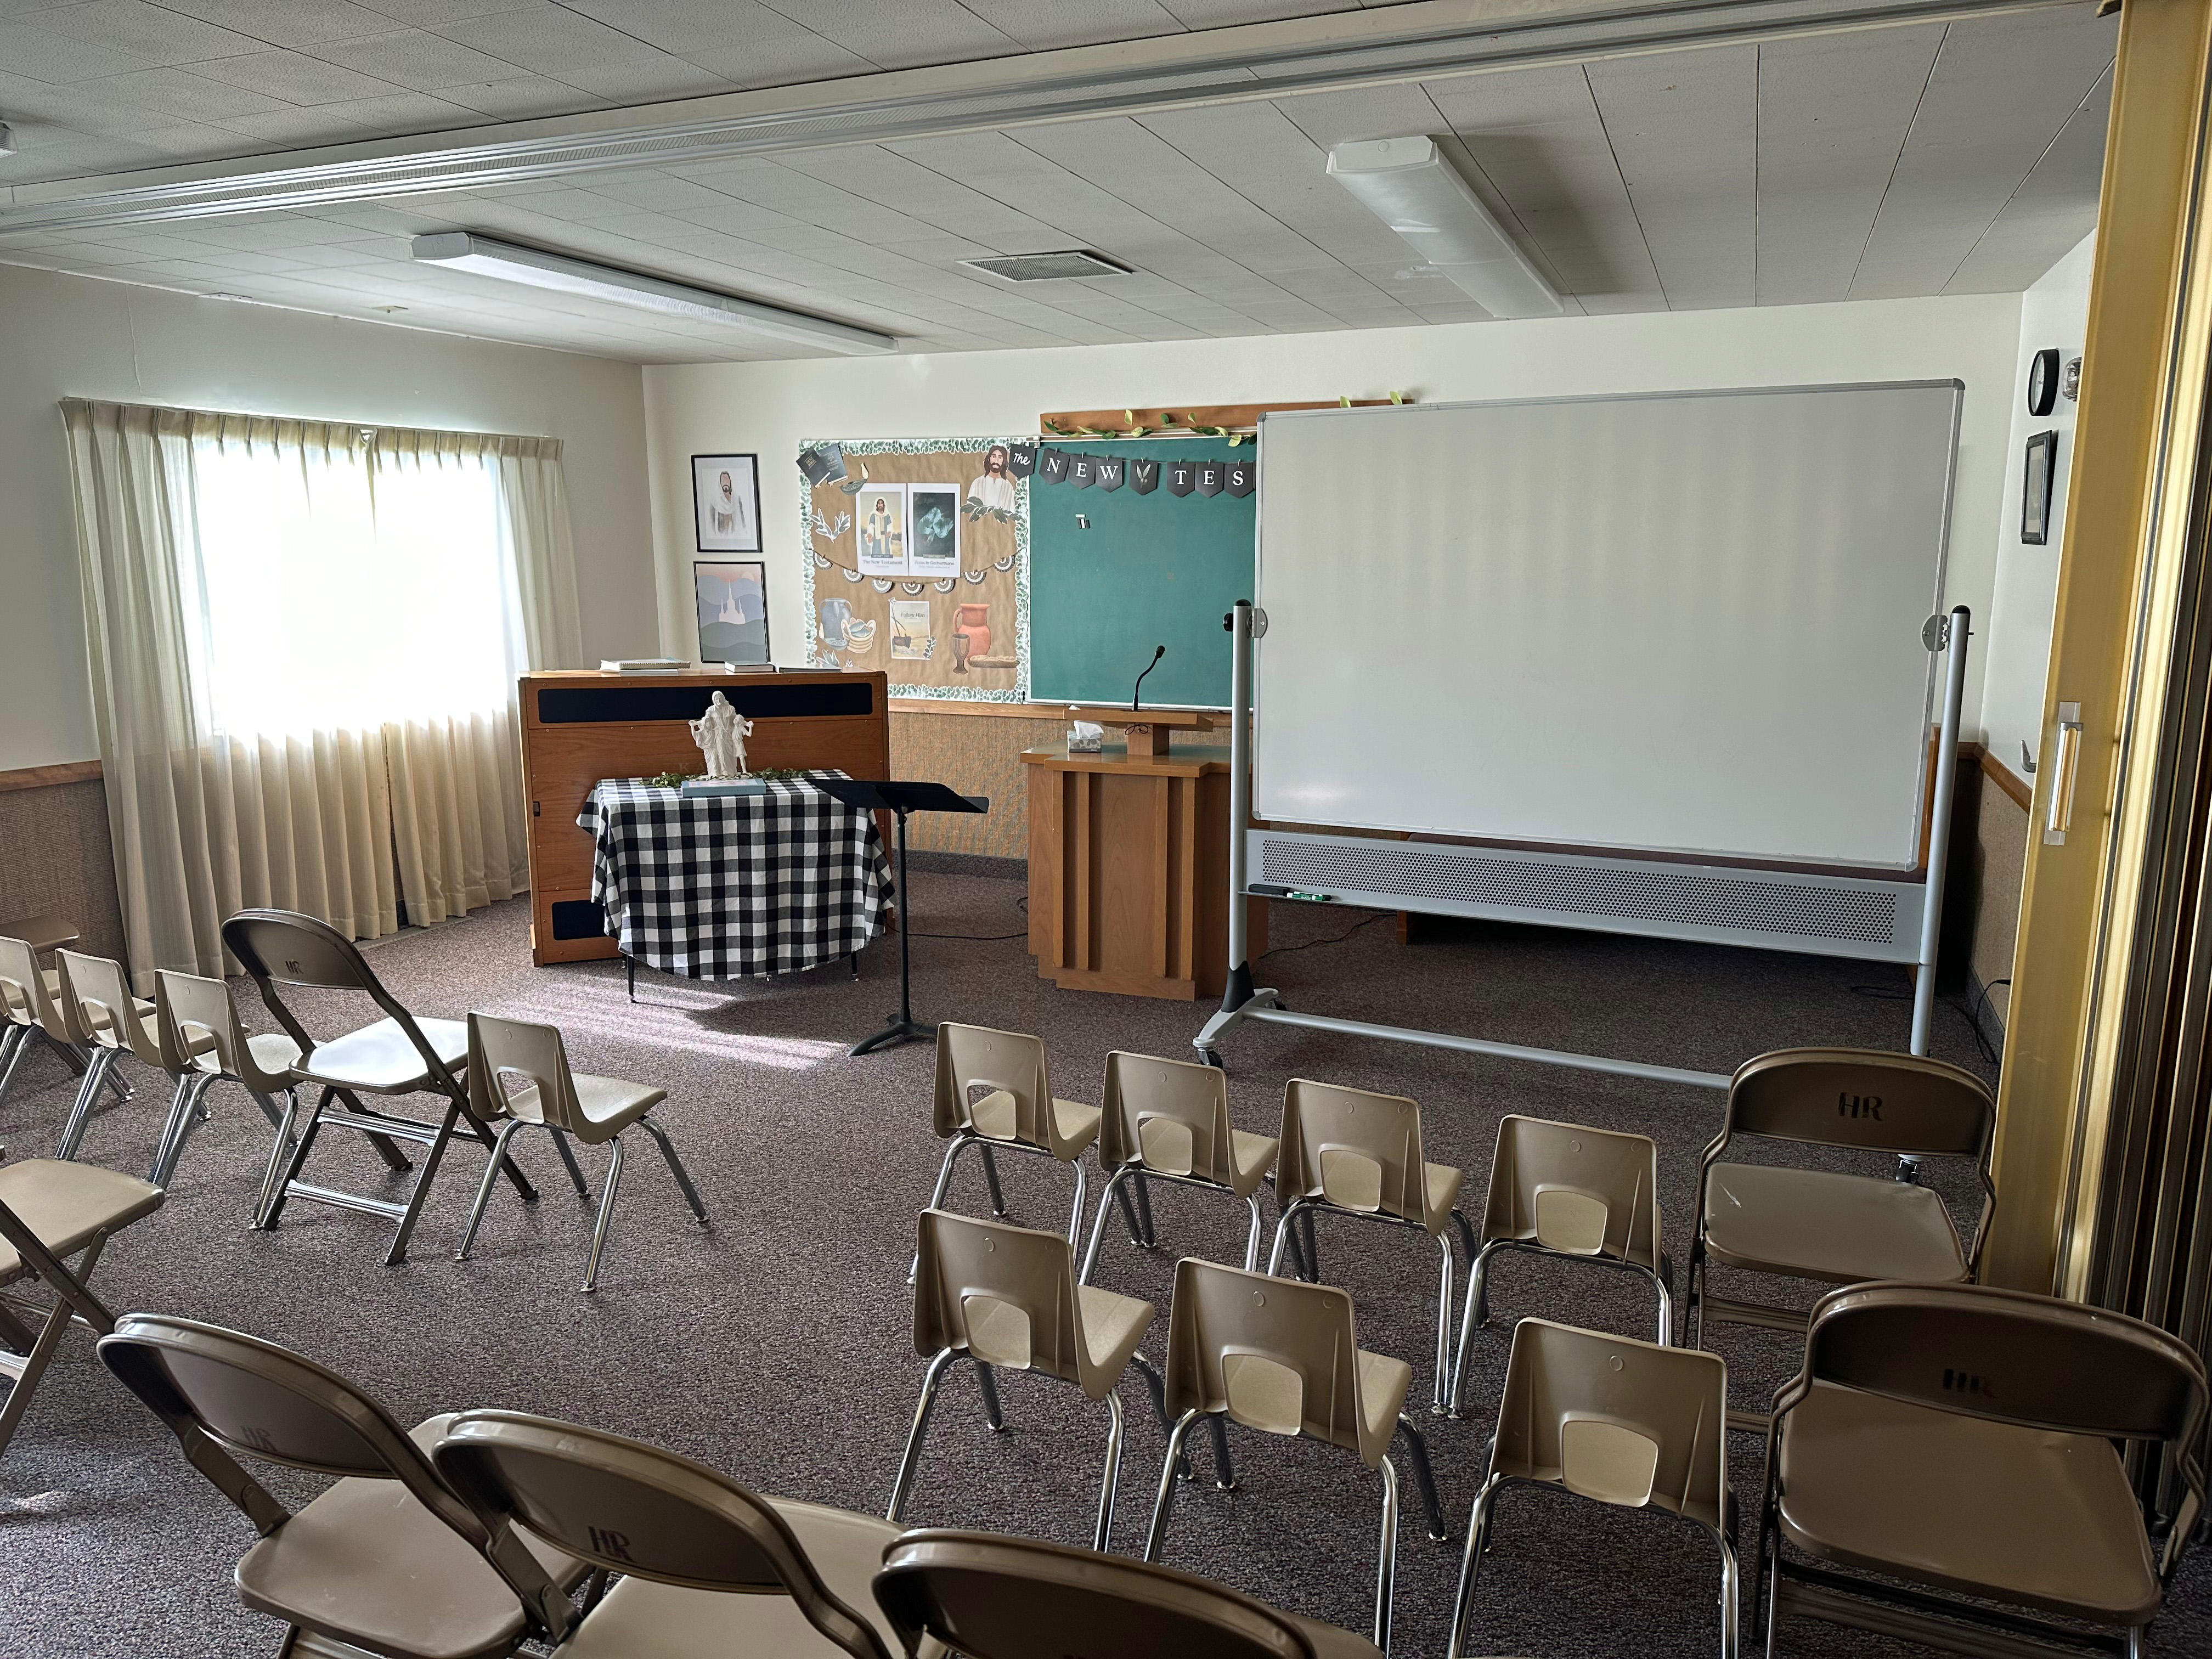 Primary Room where children meet for Sunday School lessons